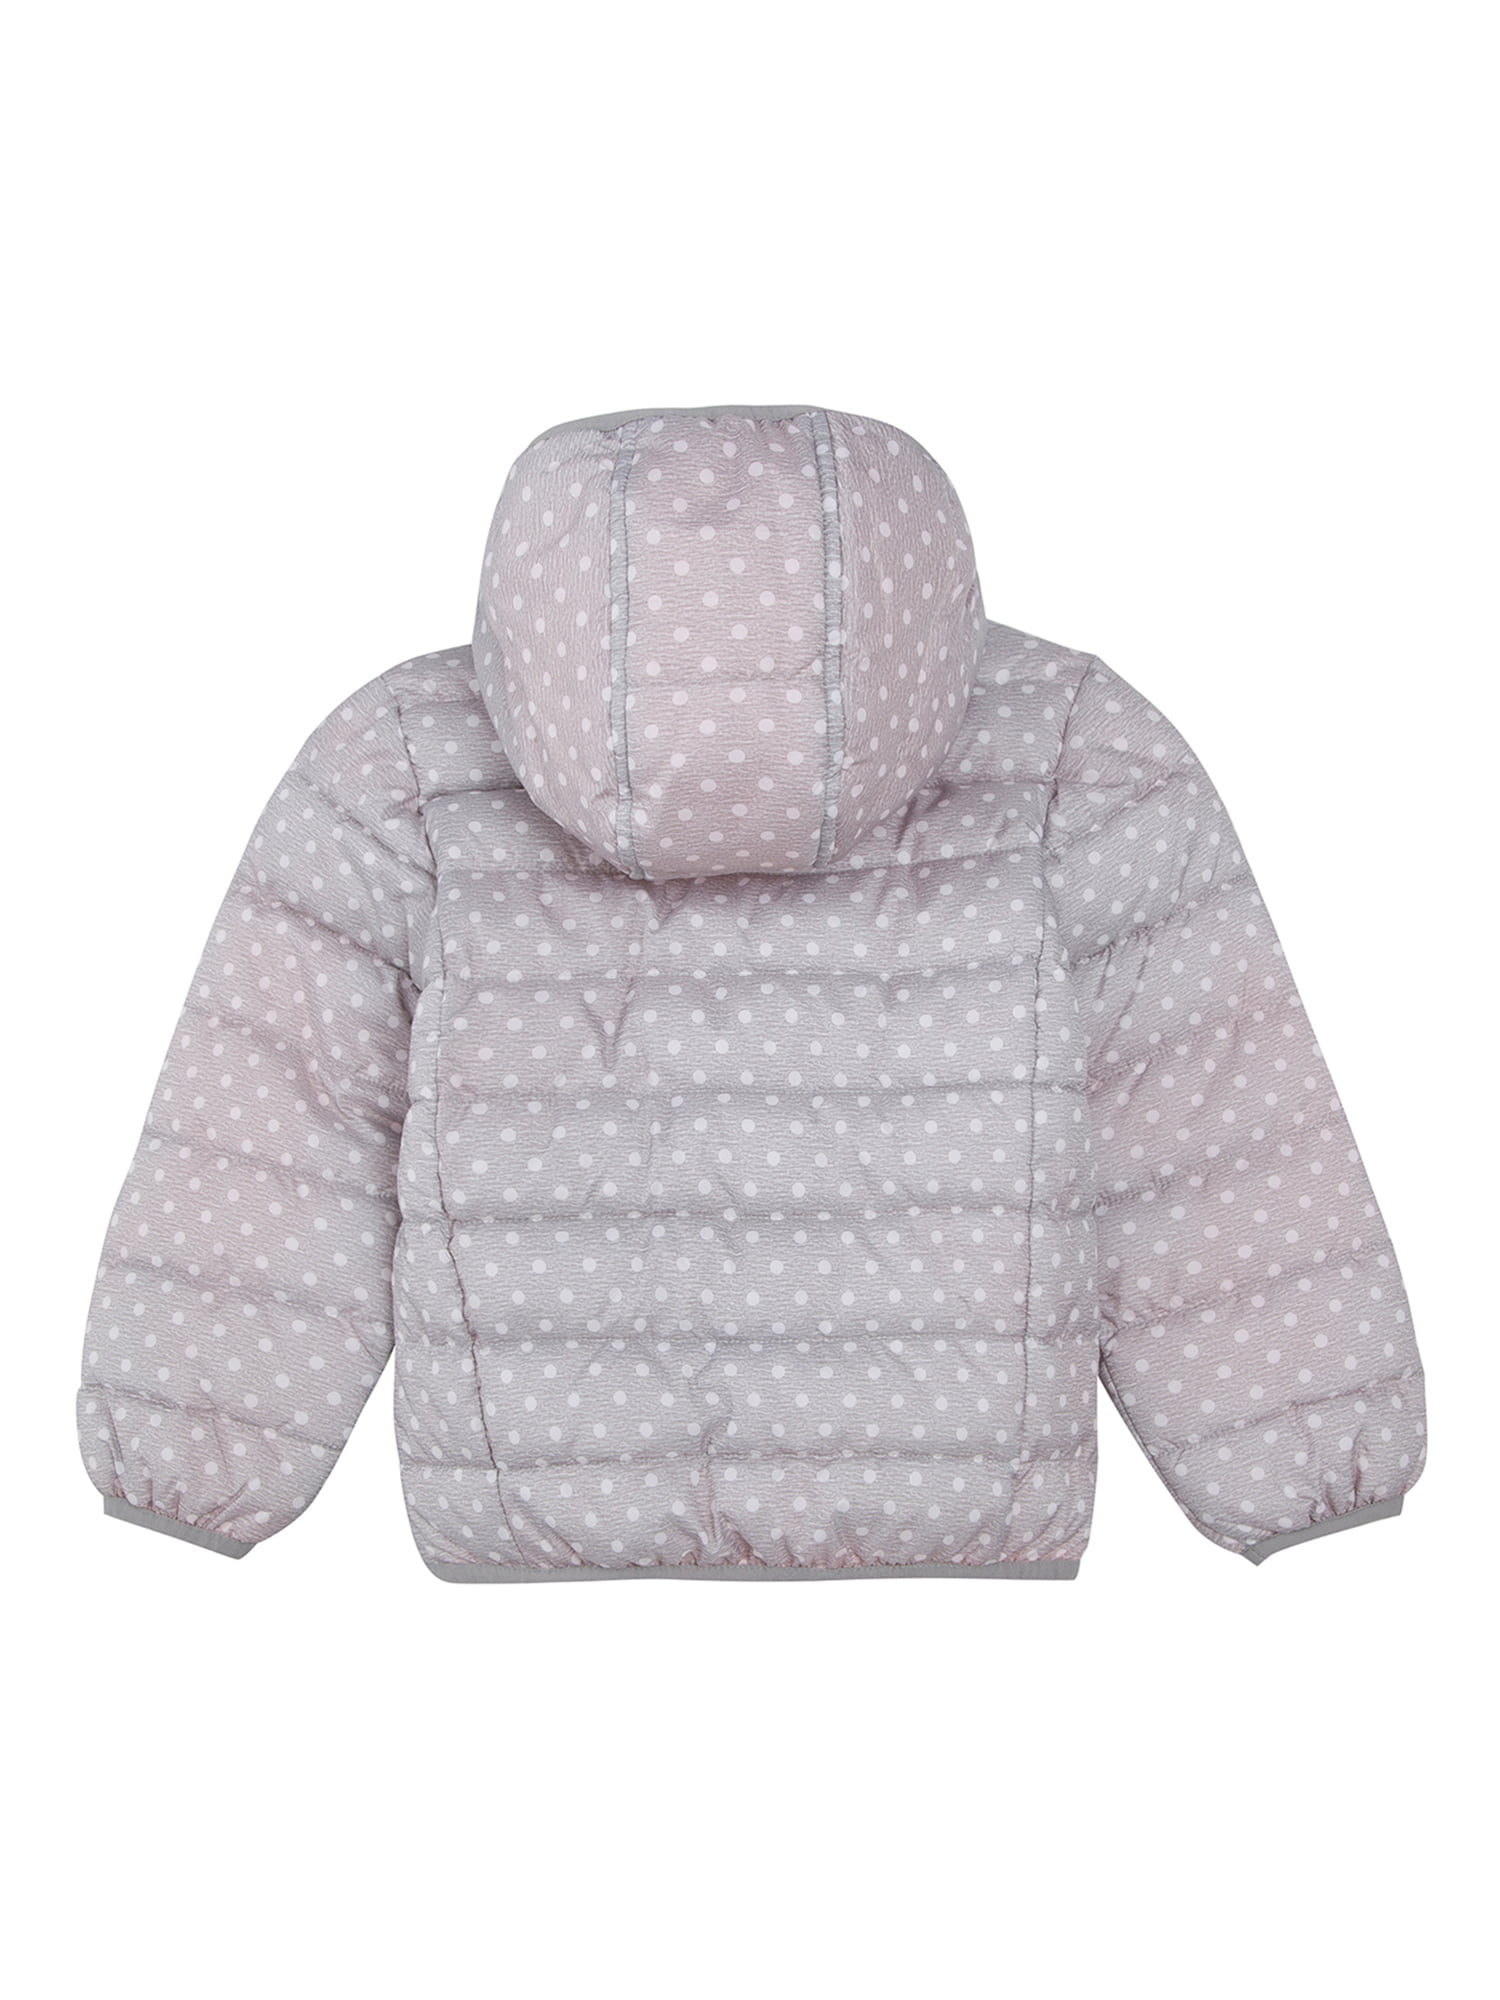 Rokka&Rolla Baby Girl's Lightweight Puffer Jacket Winter Coat for Newborn Toddler Kids 2T-4T 18-24M 